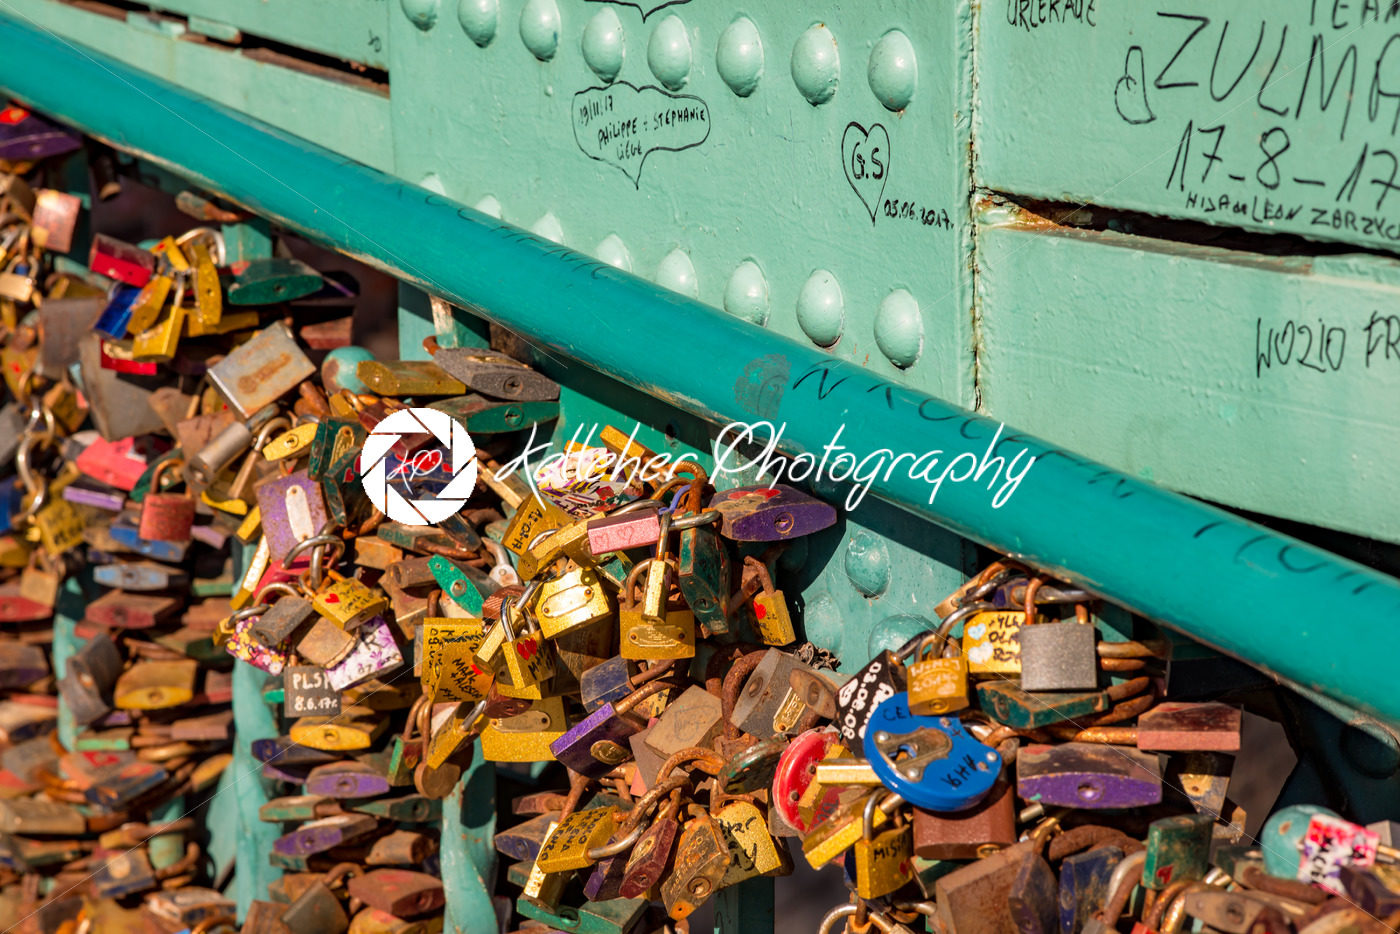 Wroclaw, Poland – March 9, 2108: Symbolic love padlocks fixed to the railings of grunwaldzki bridge, Wroclaw, Poland. - Kelleher Photography Store